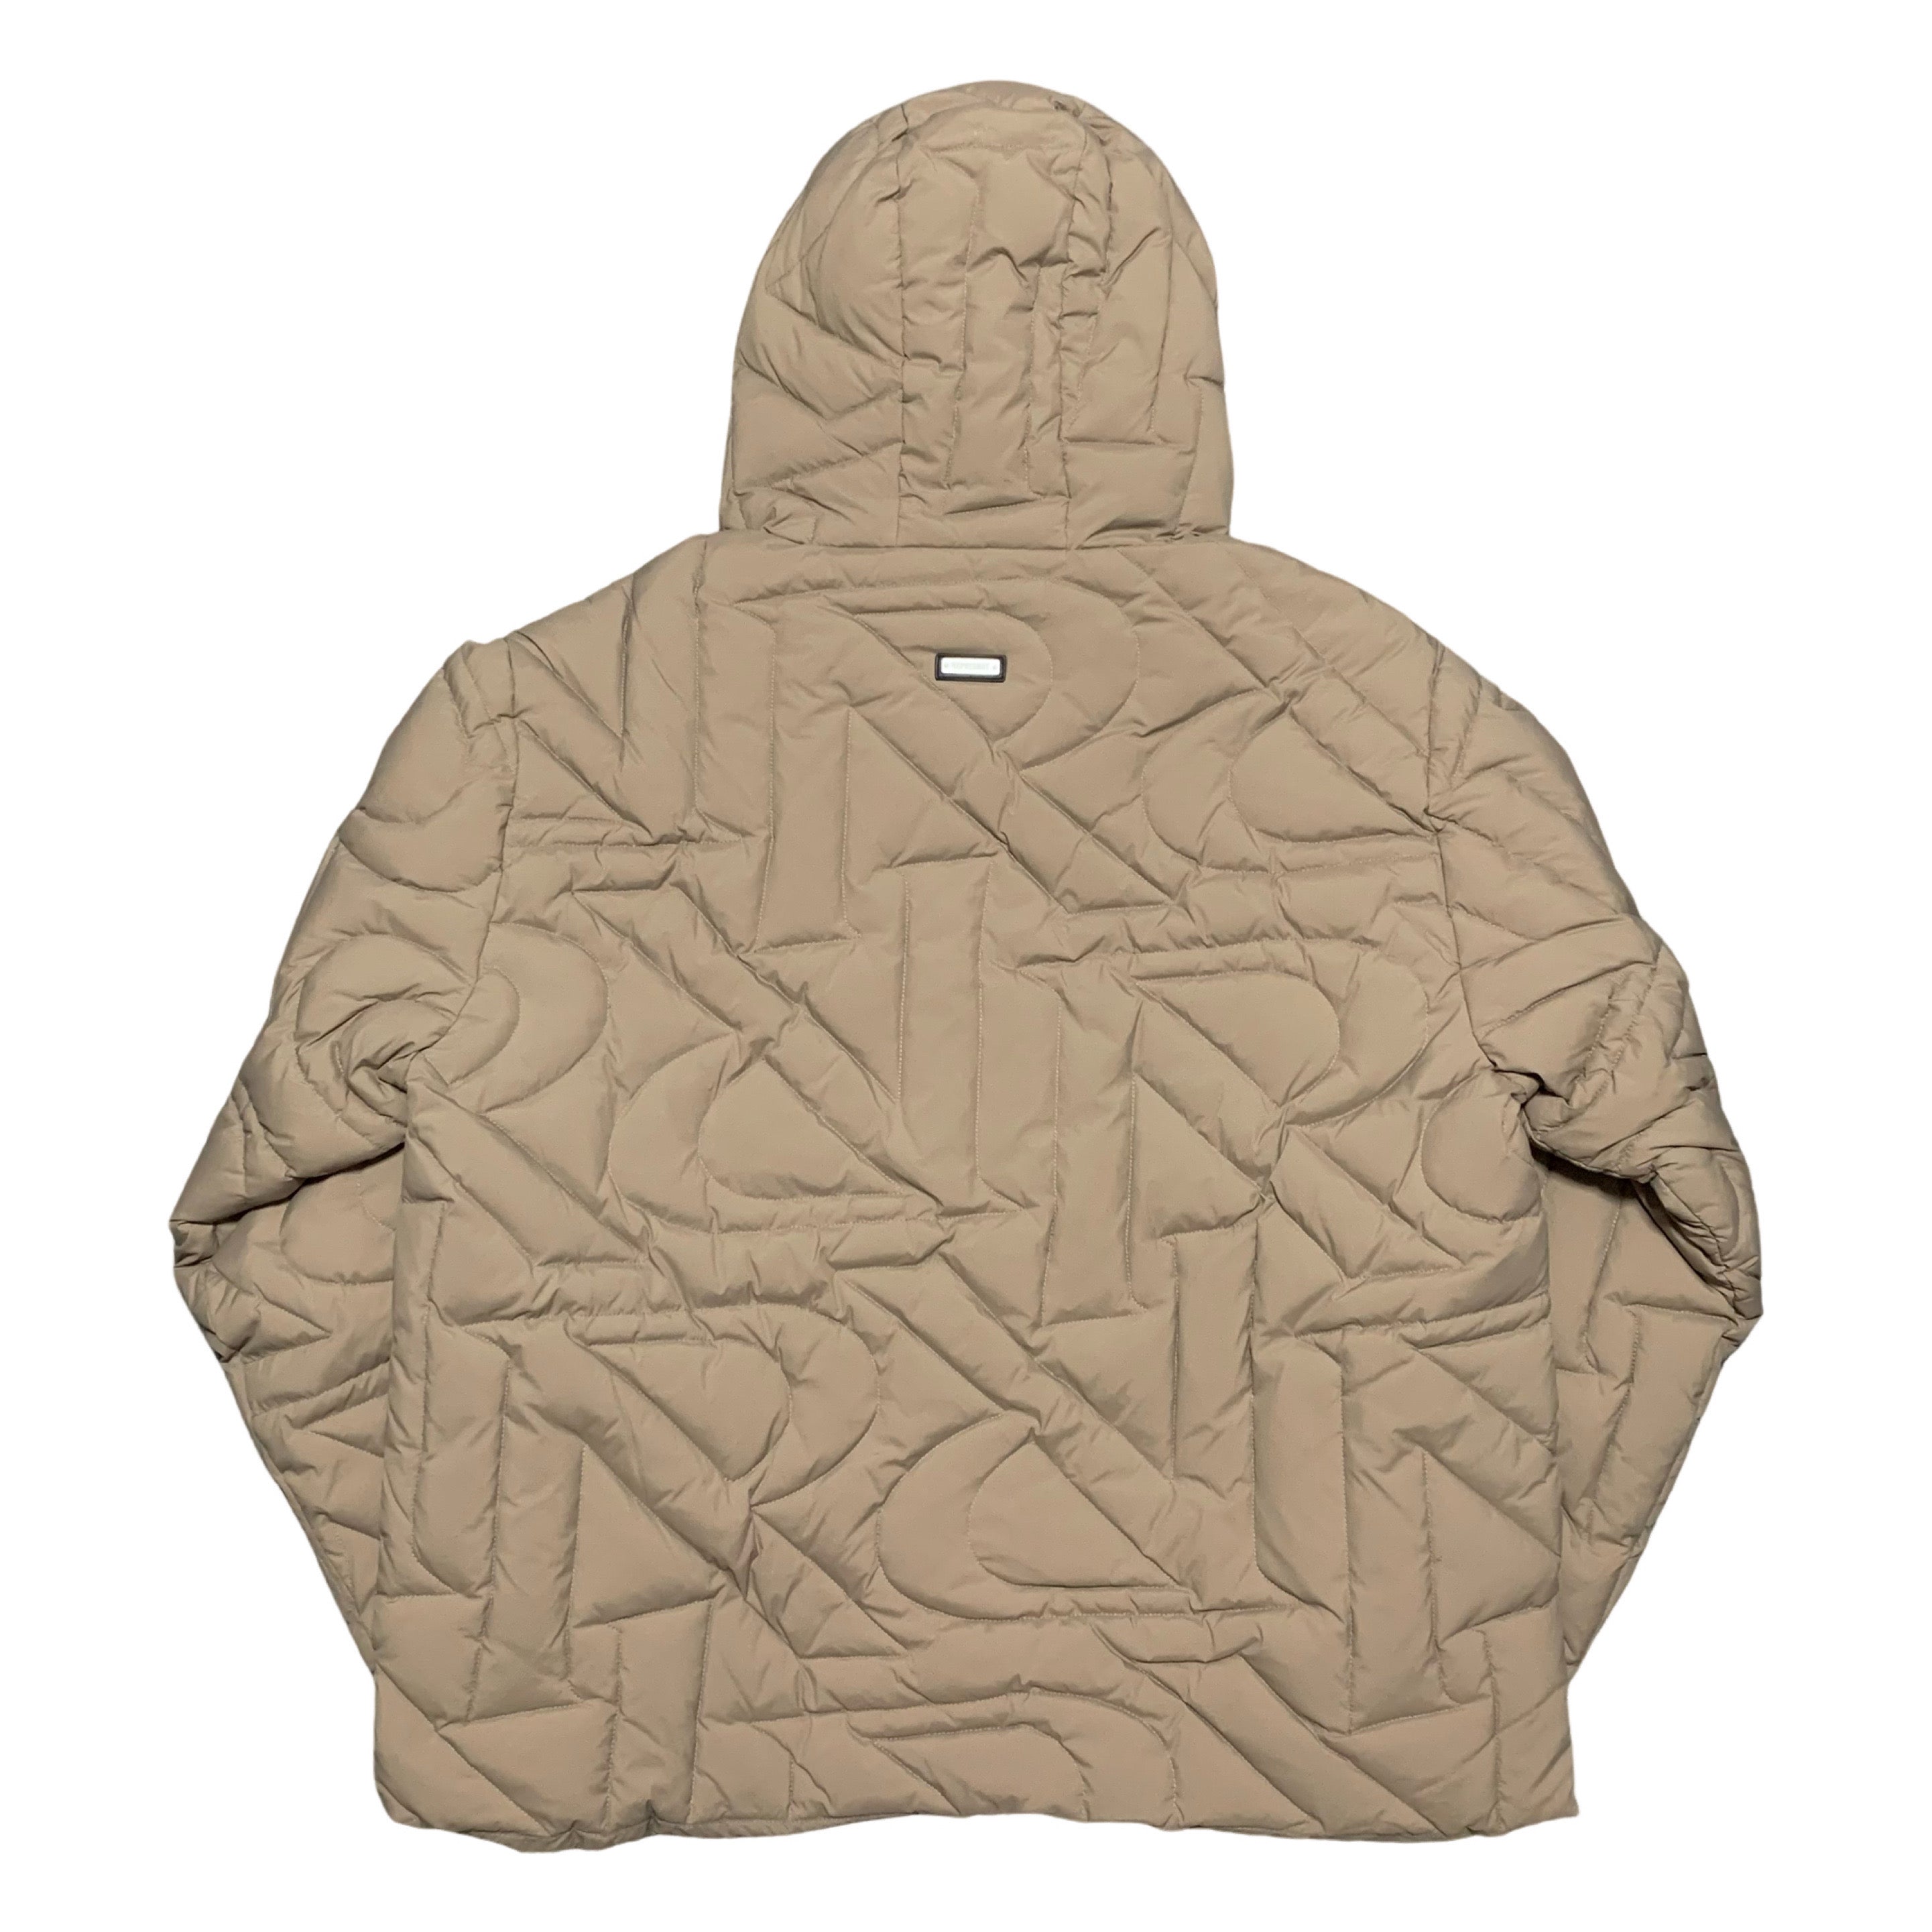 Represent XL Jacket Initial Lightweight Hooded Puffer Jacket Mushroom Brown